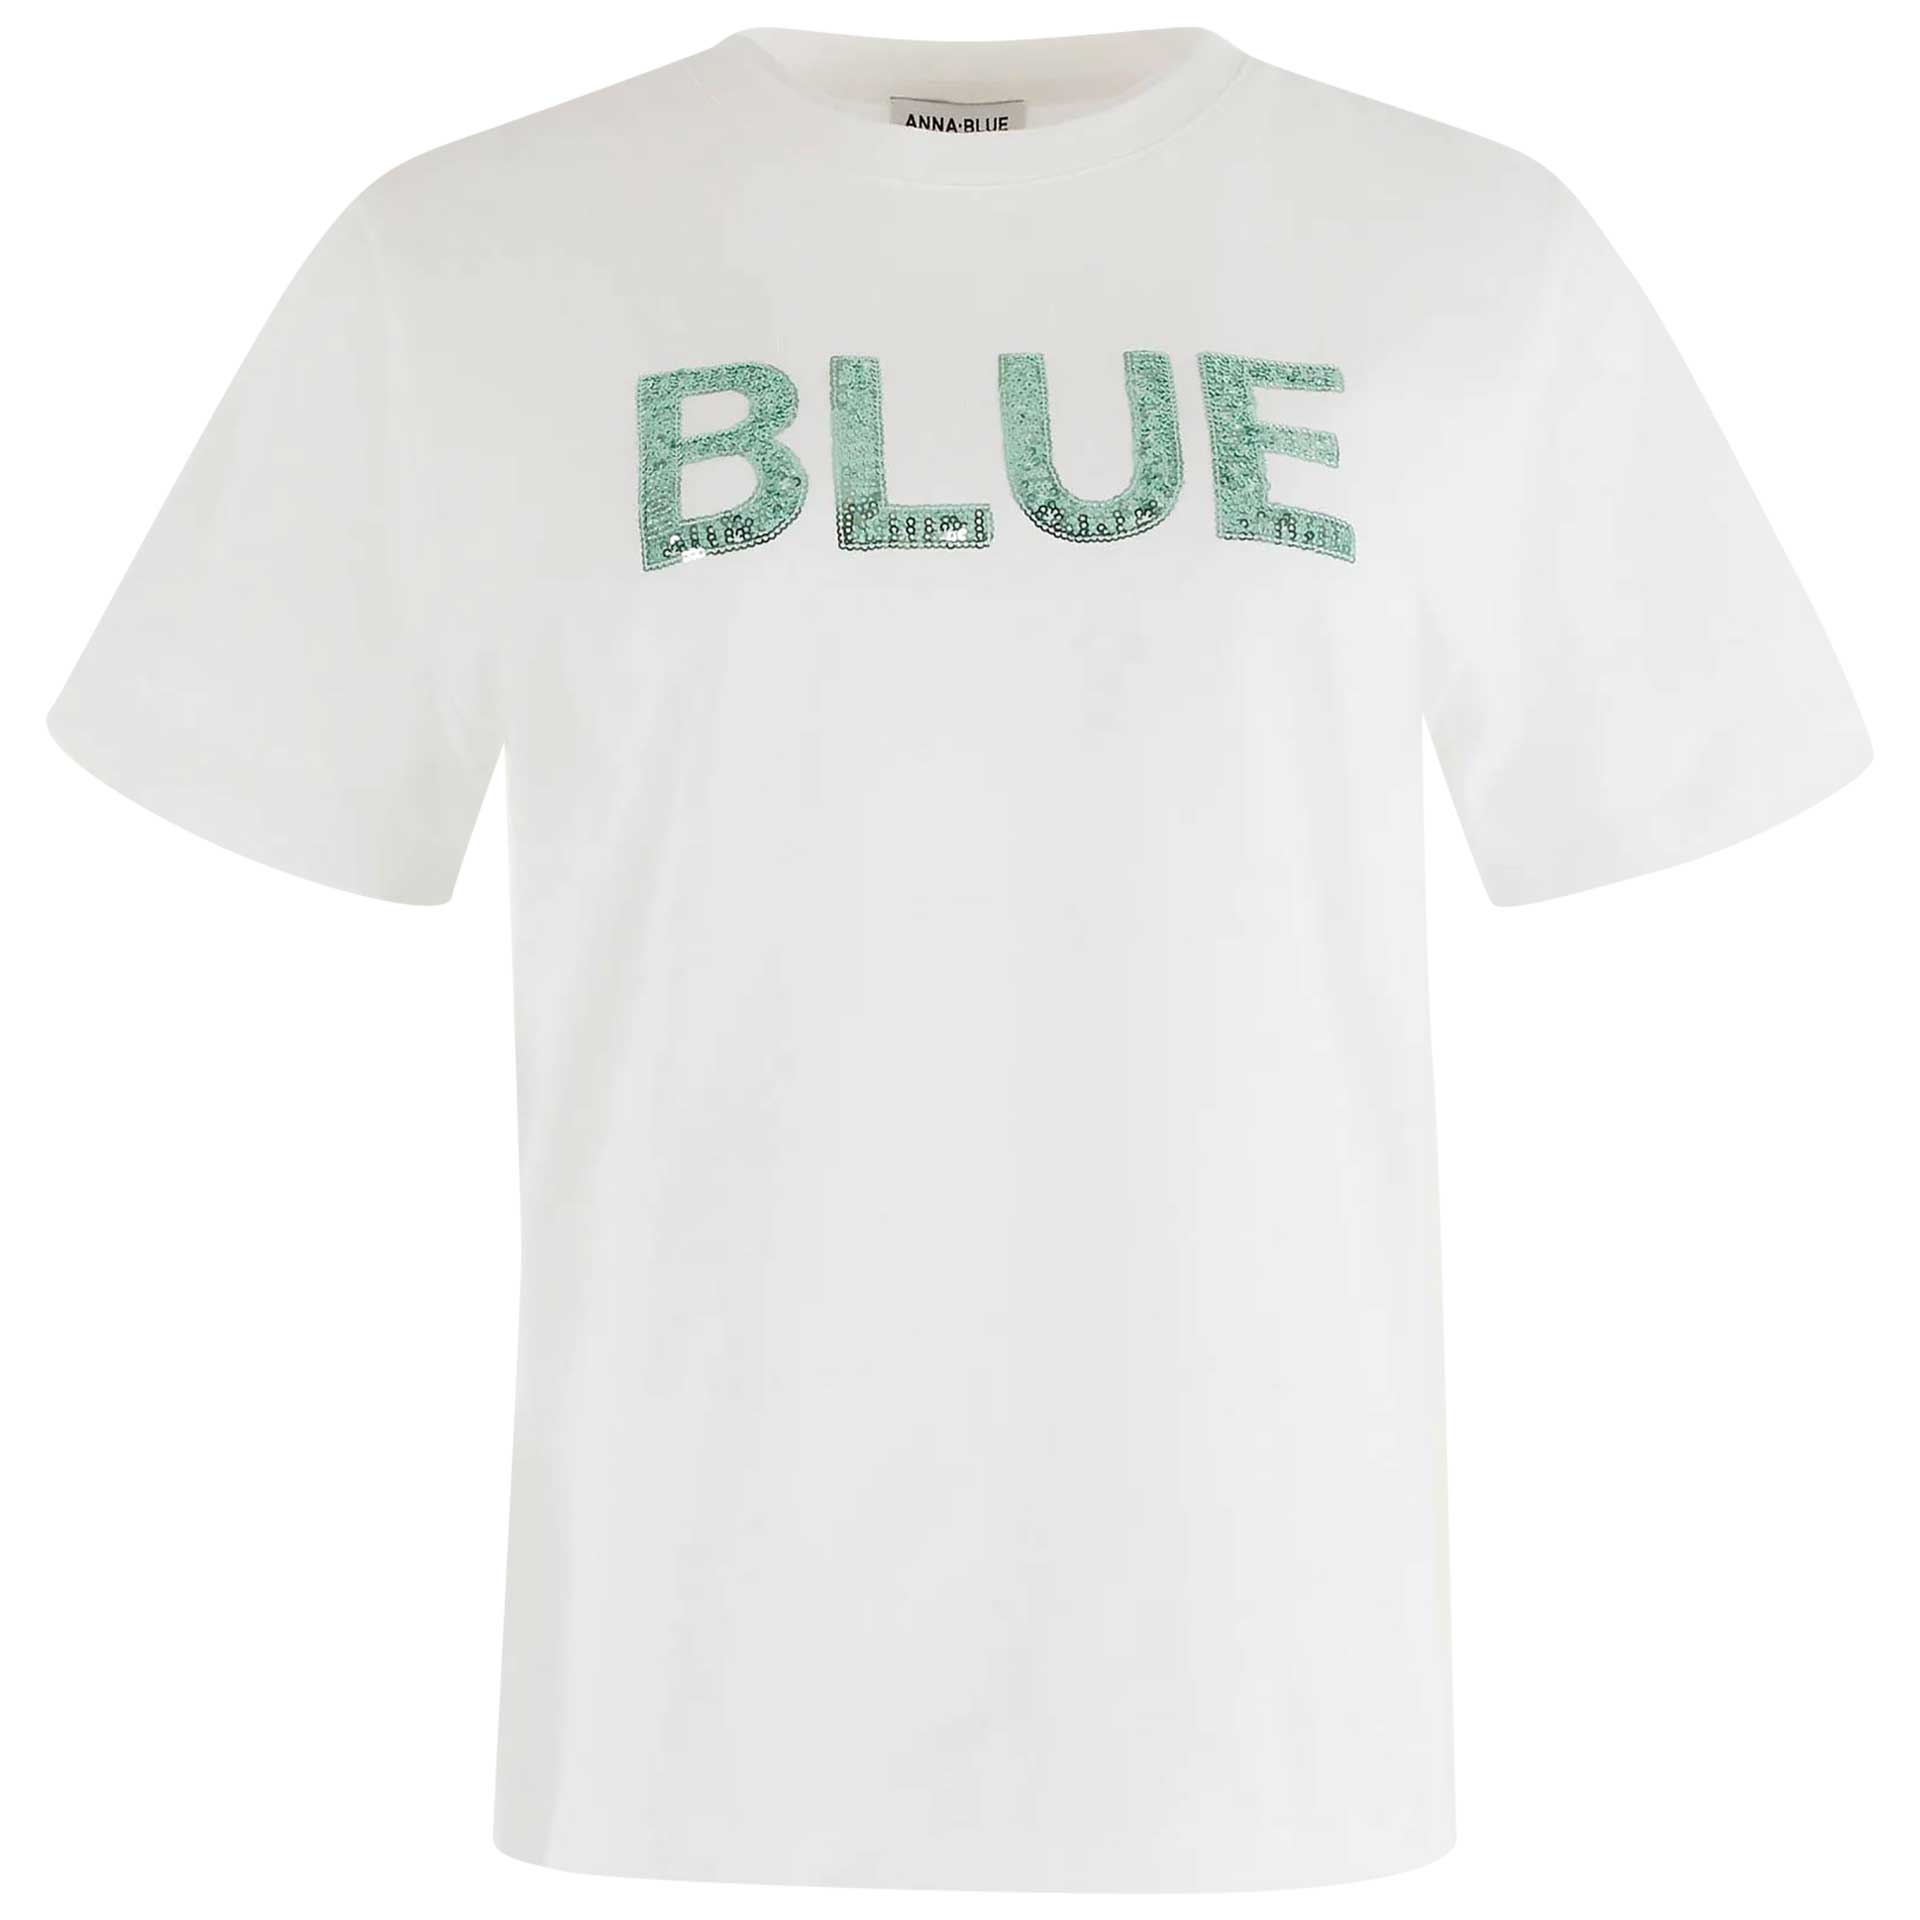 Anna Blue T-shirt 1